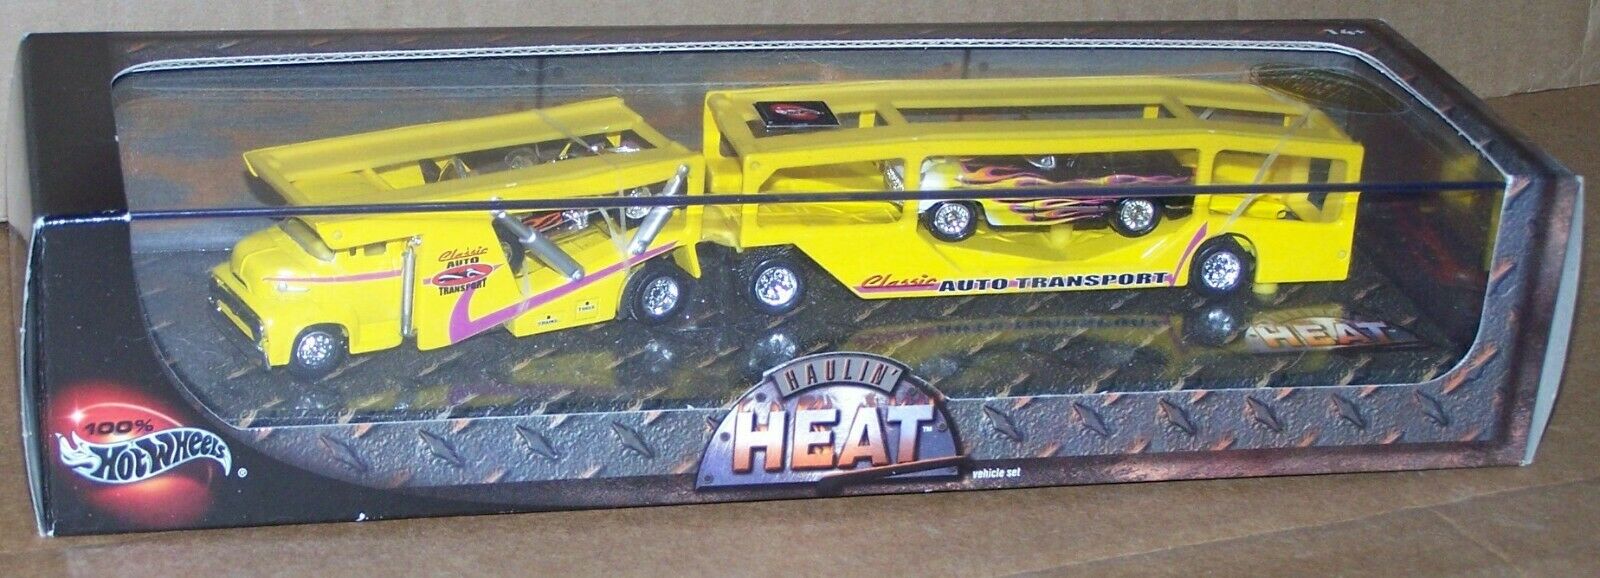 Haulin' Heat 4-Car Set | Hot Wheels Wiki | Fandom